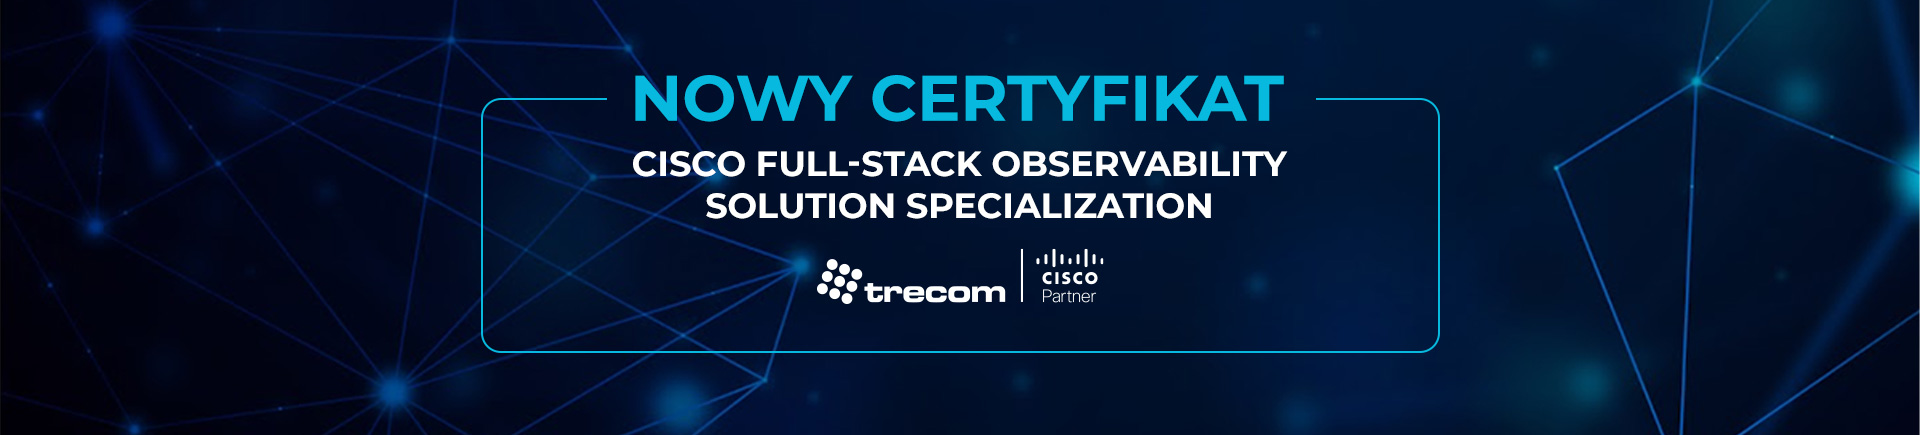 Nowy certyfikat Cisco Full-Stack Observability Solution Specialization dla Trecom